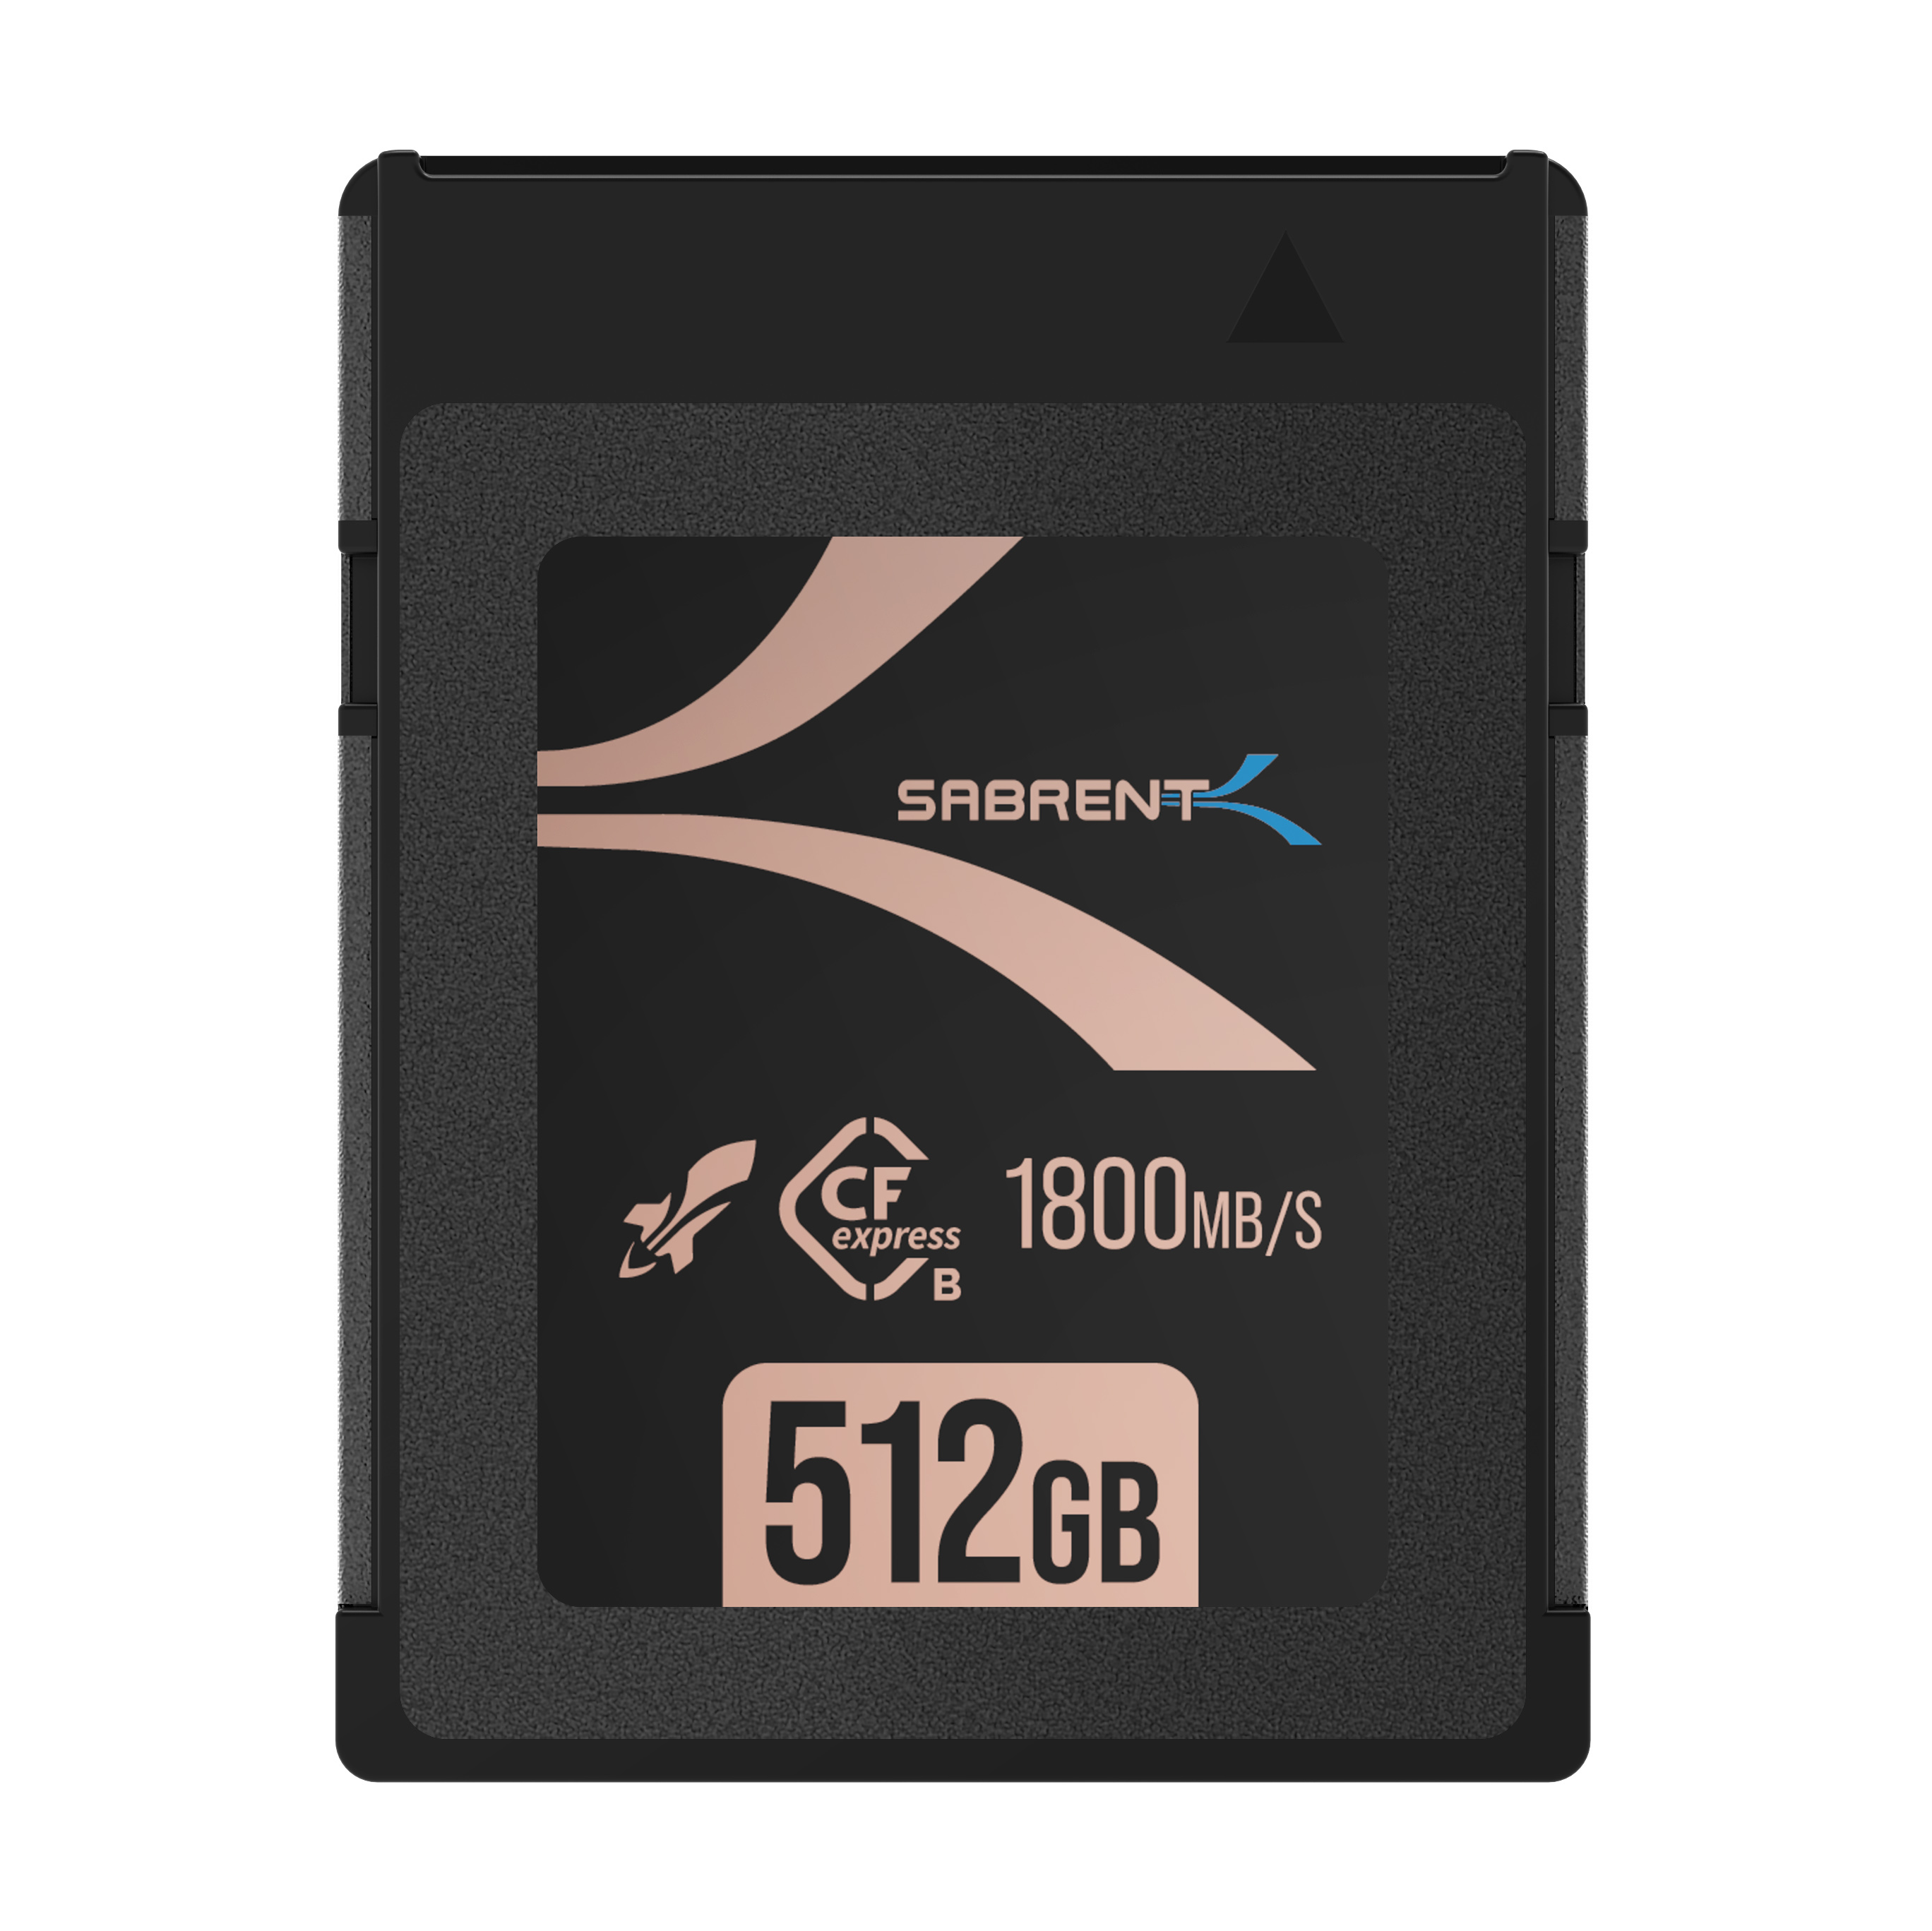 SABRENT 512GB CFexpress Typ B, 512 GB, 1800 CFexpress MB/s CFexpress-Karte